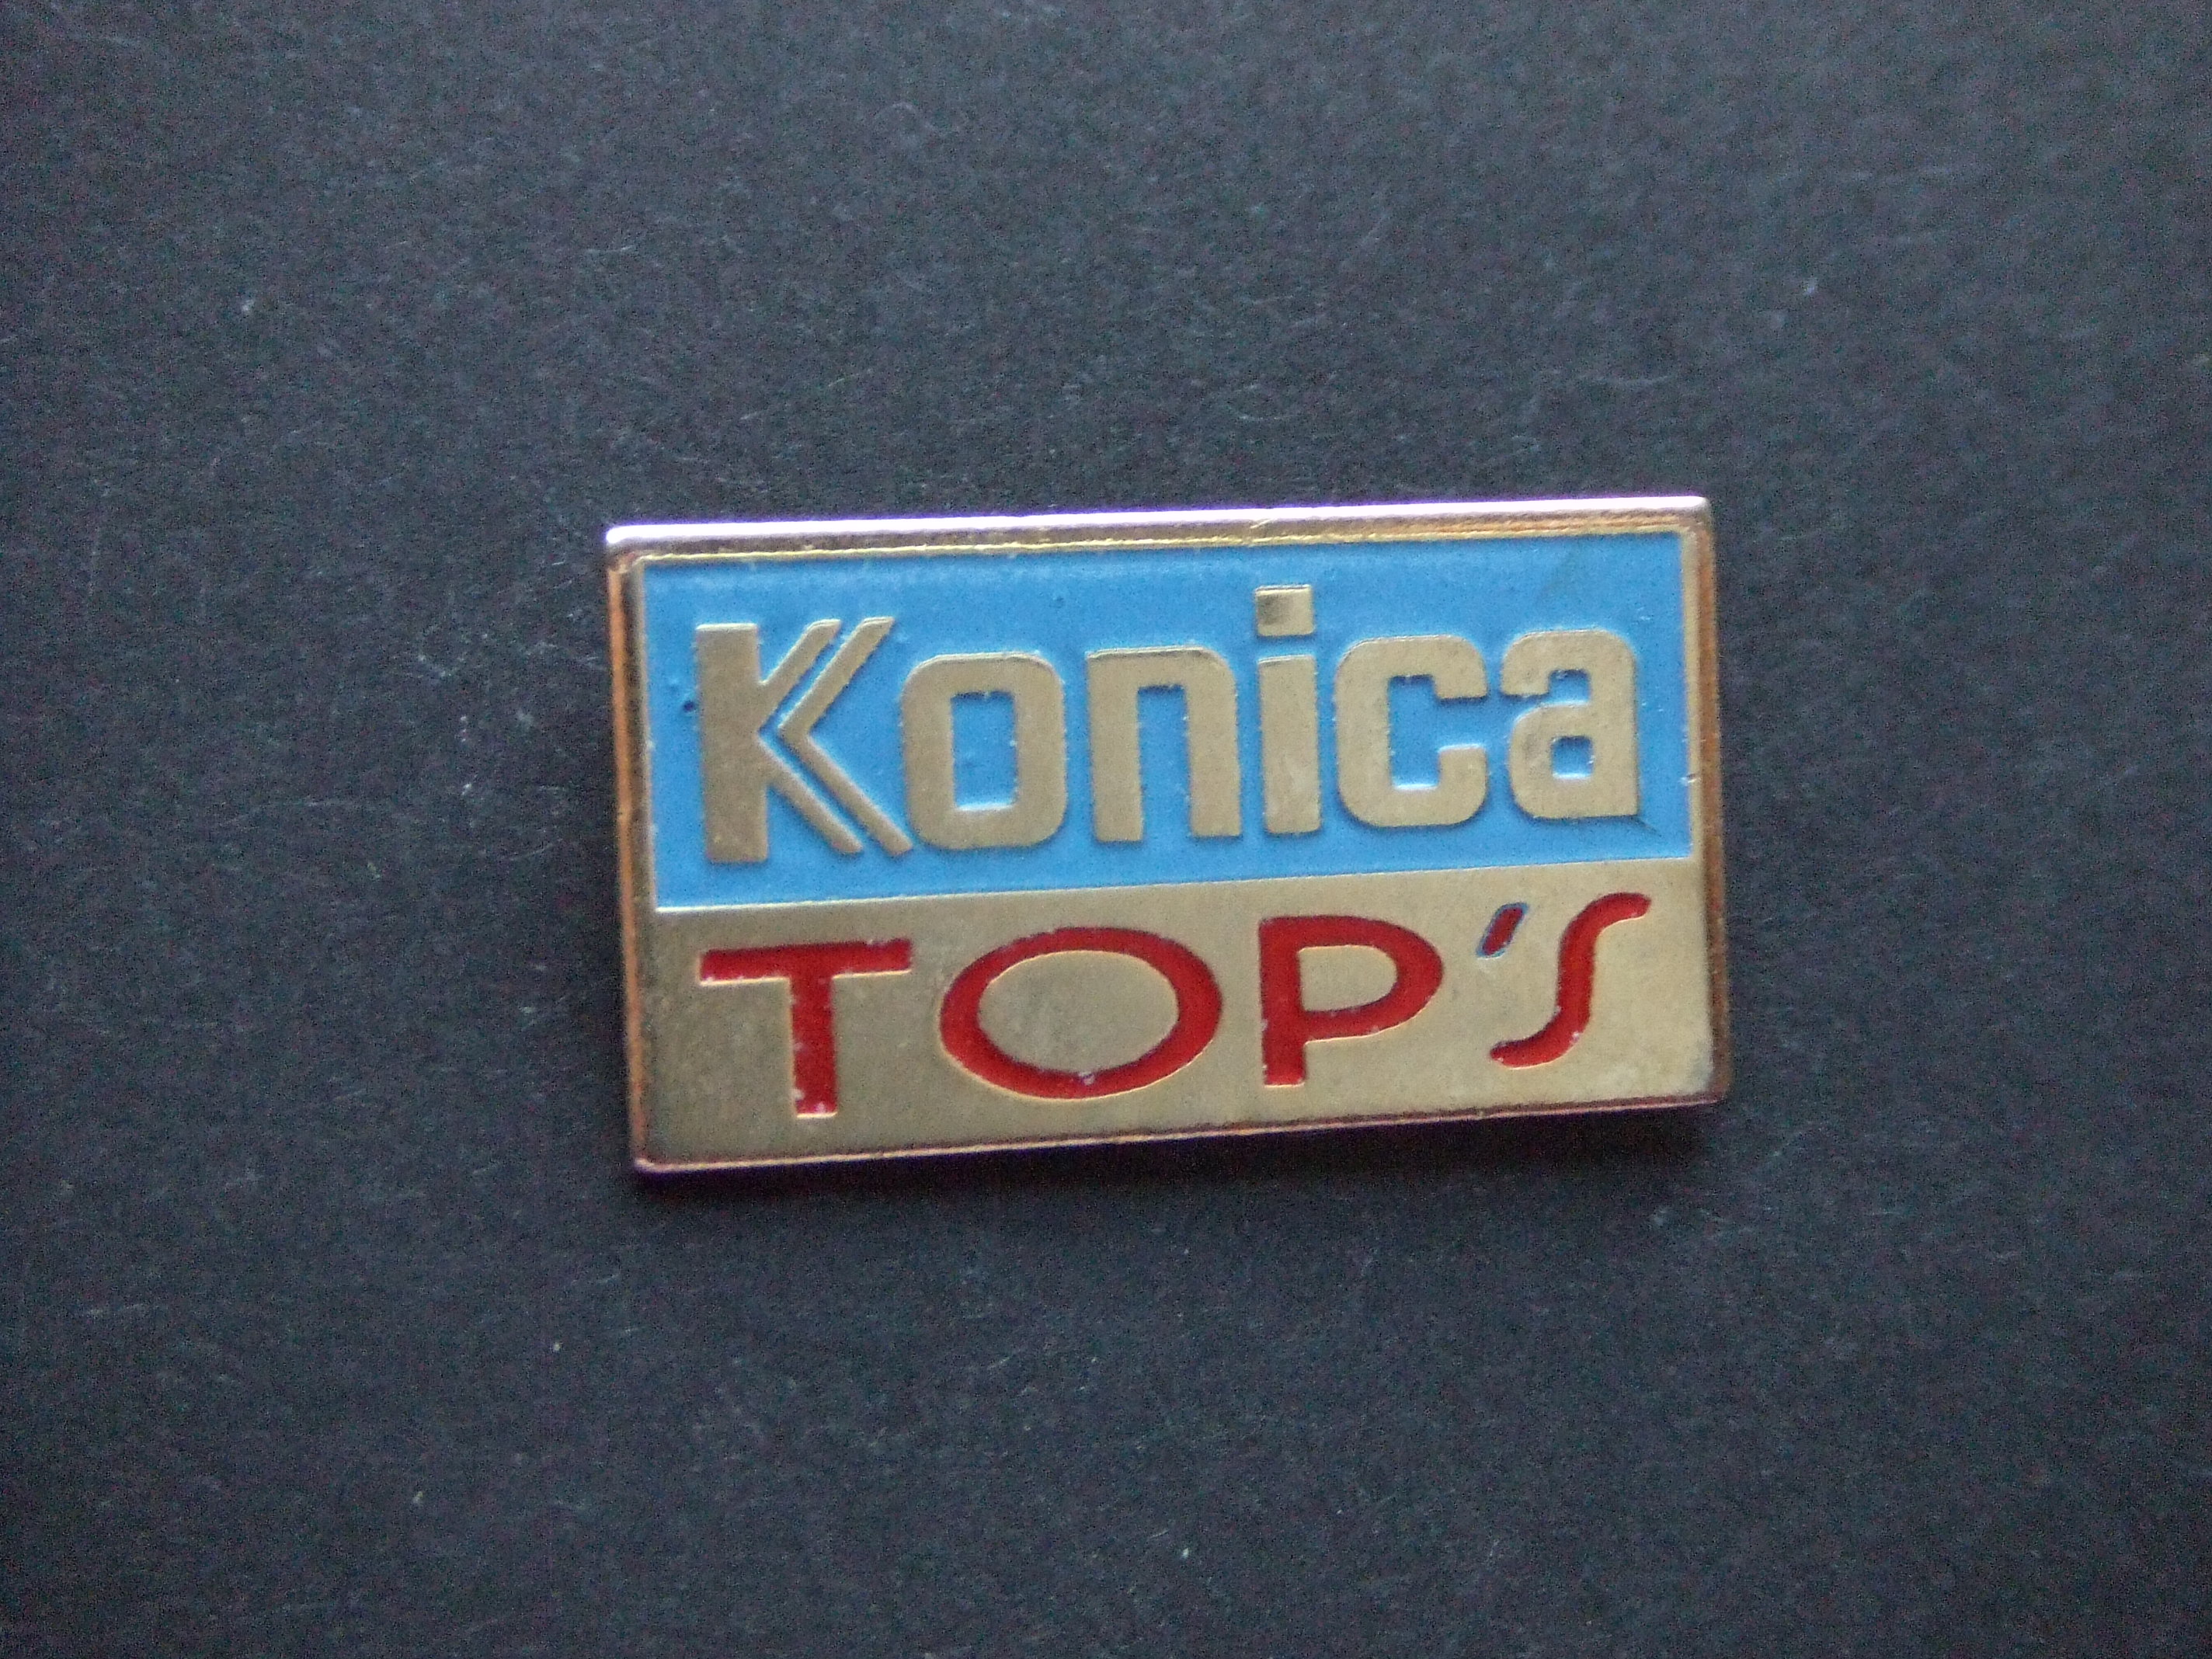 Konica Top's compact camera